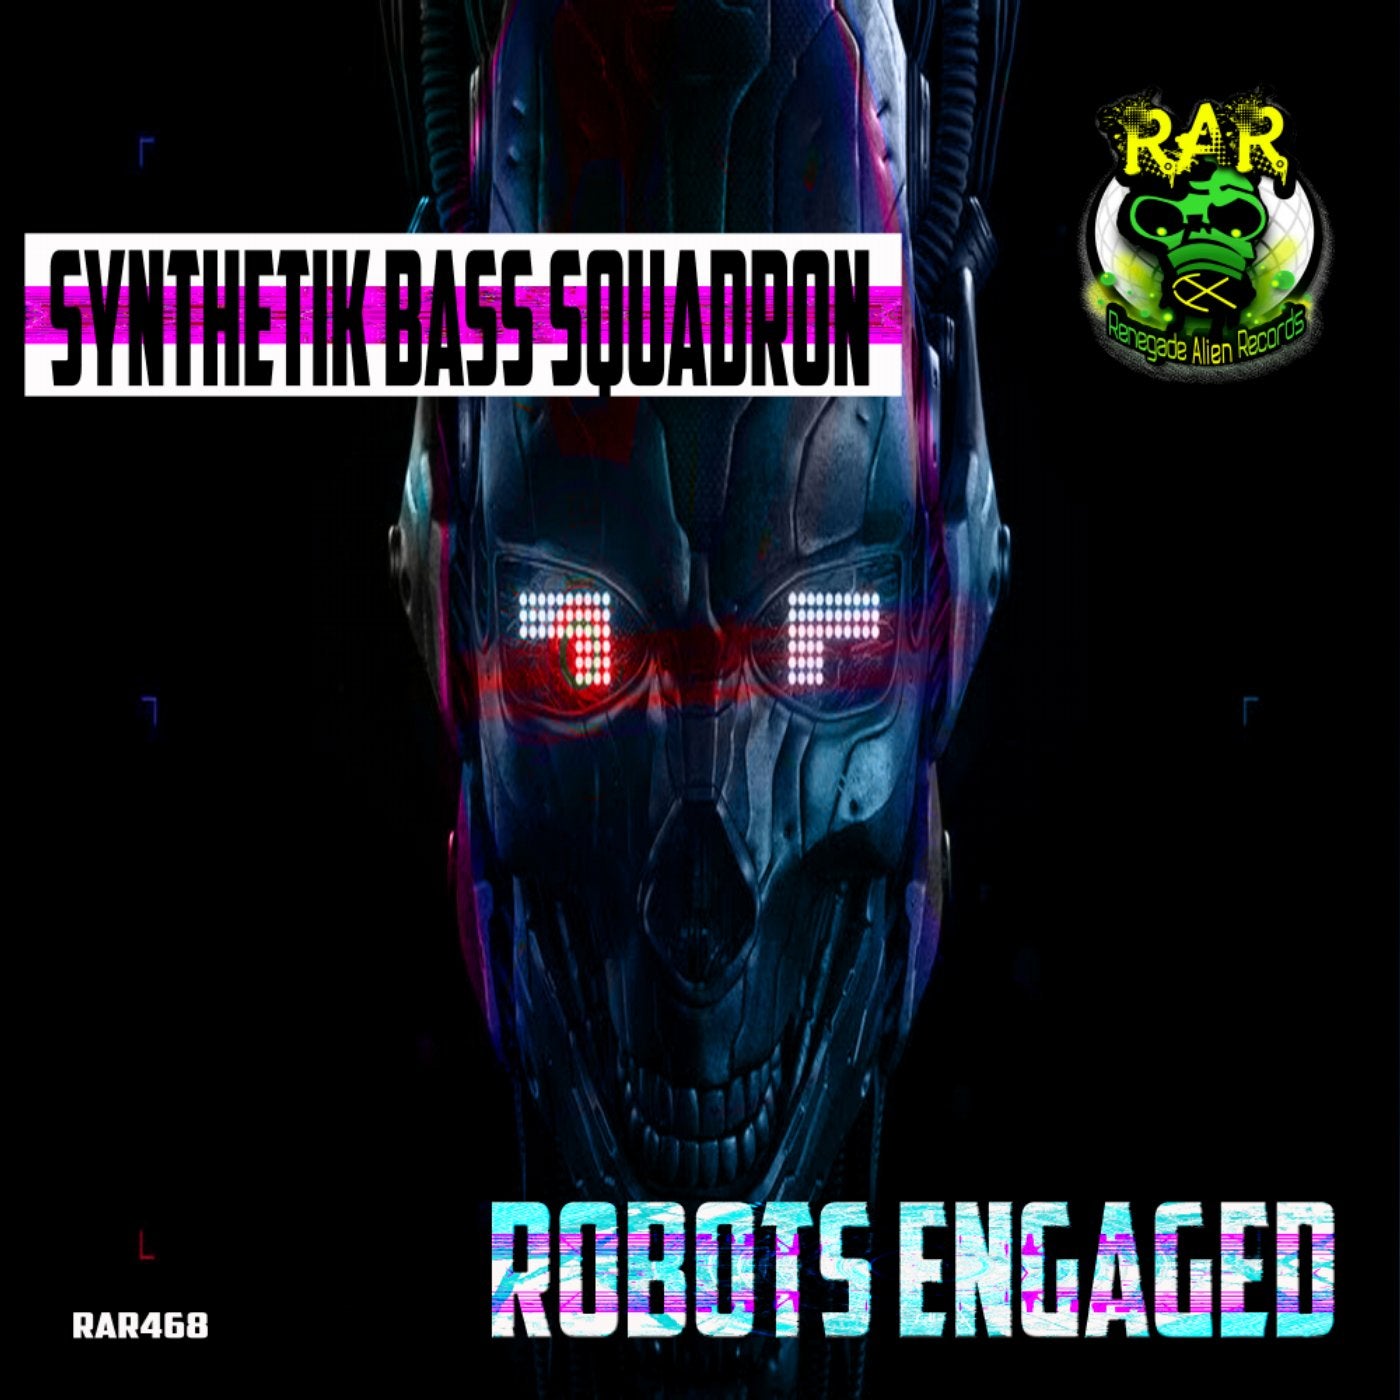 Robots Engaged